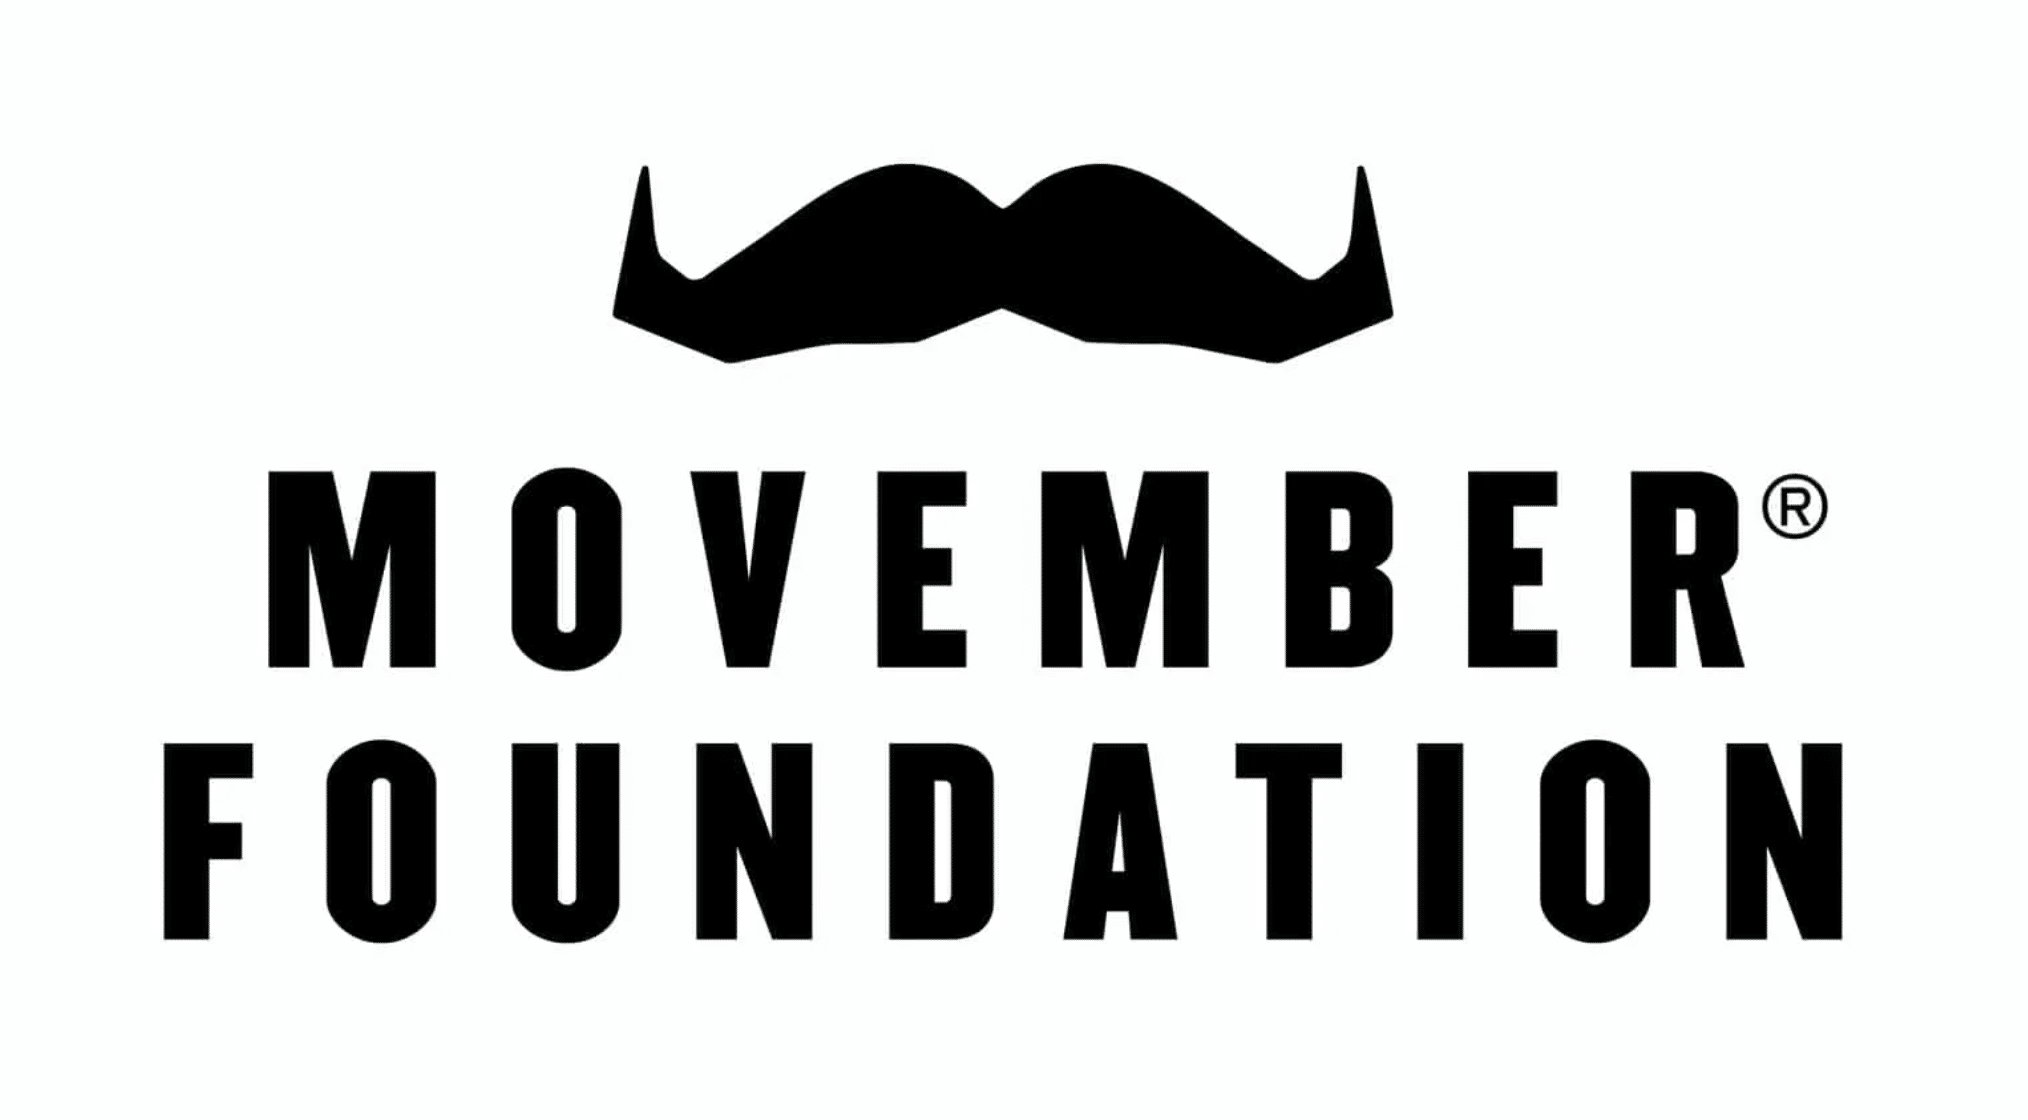 Movember logo